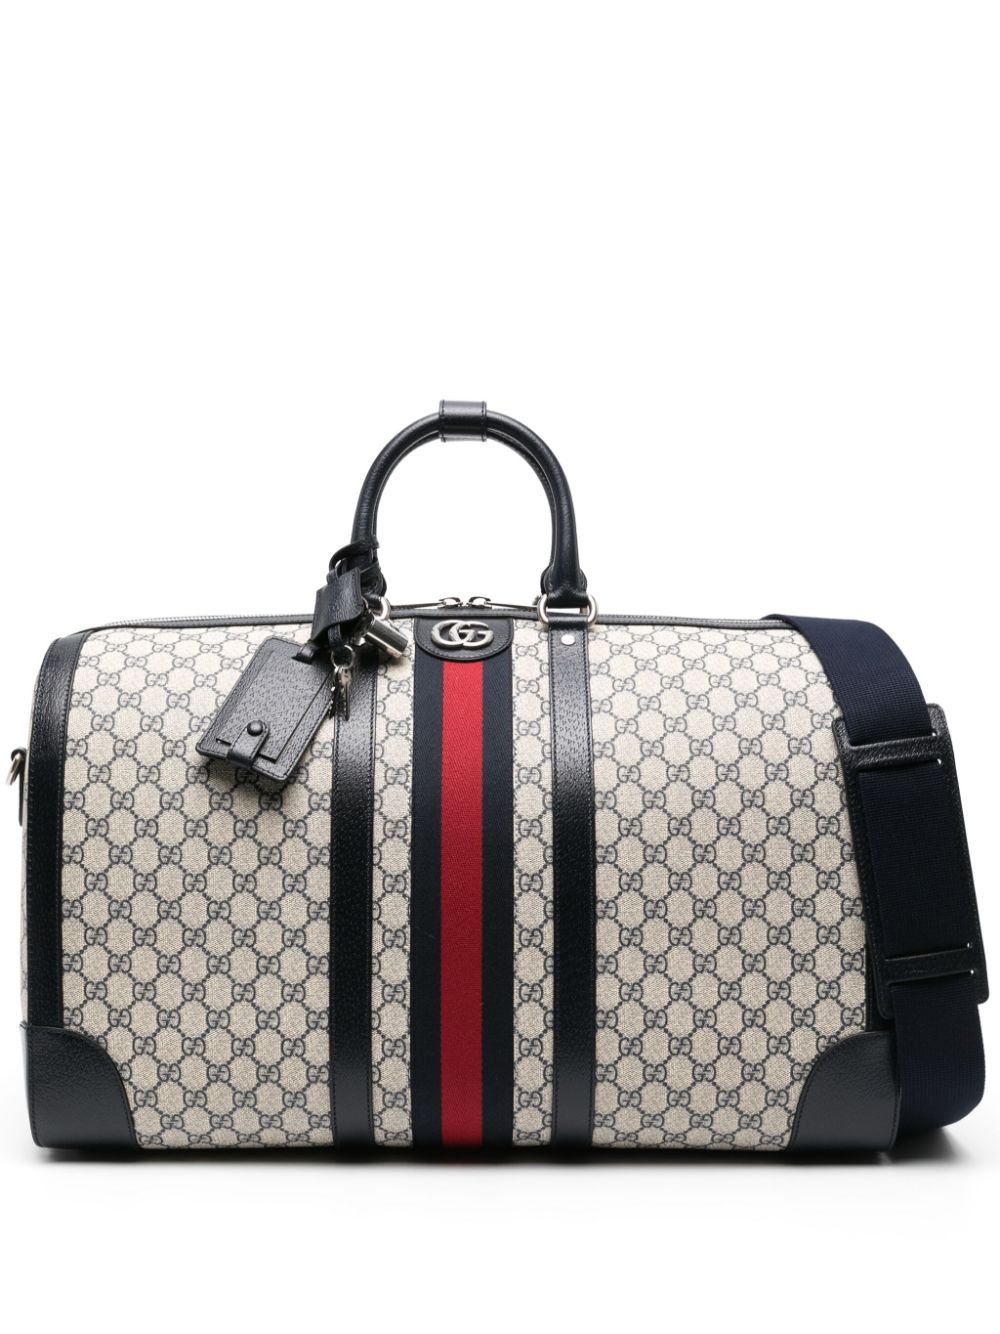 Image 1 of Gucci large Savoy duffle bag